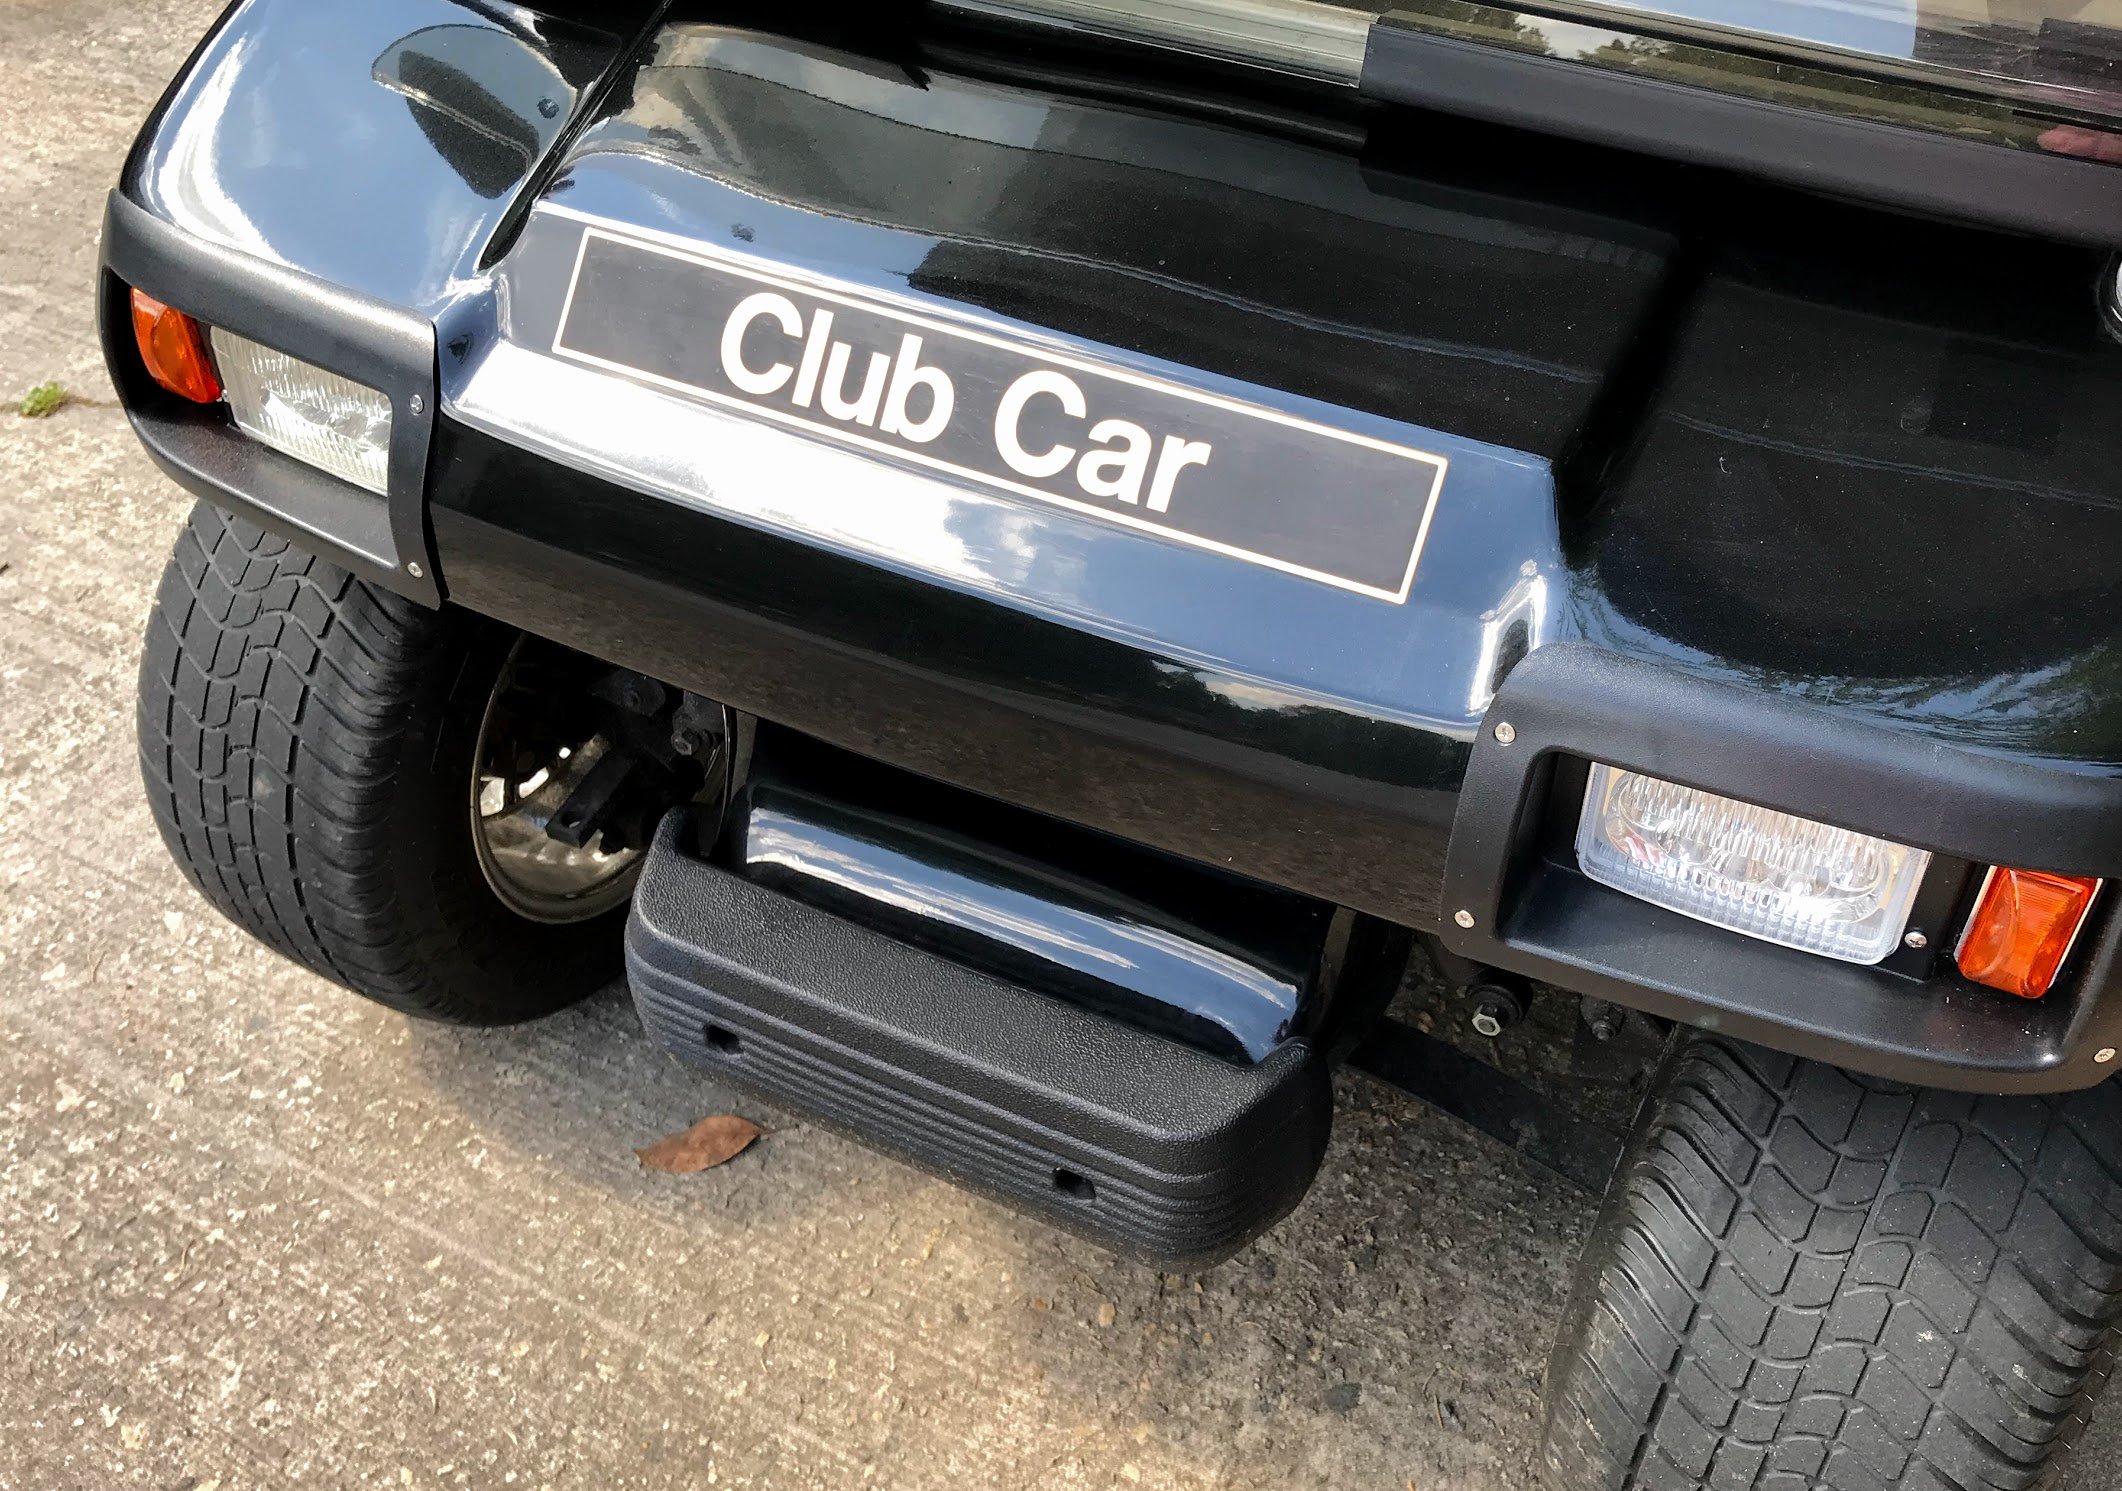 Club car service manual